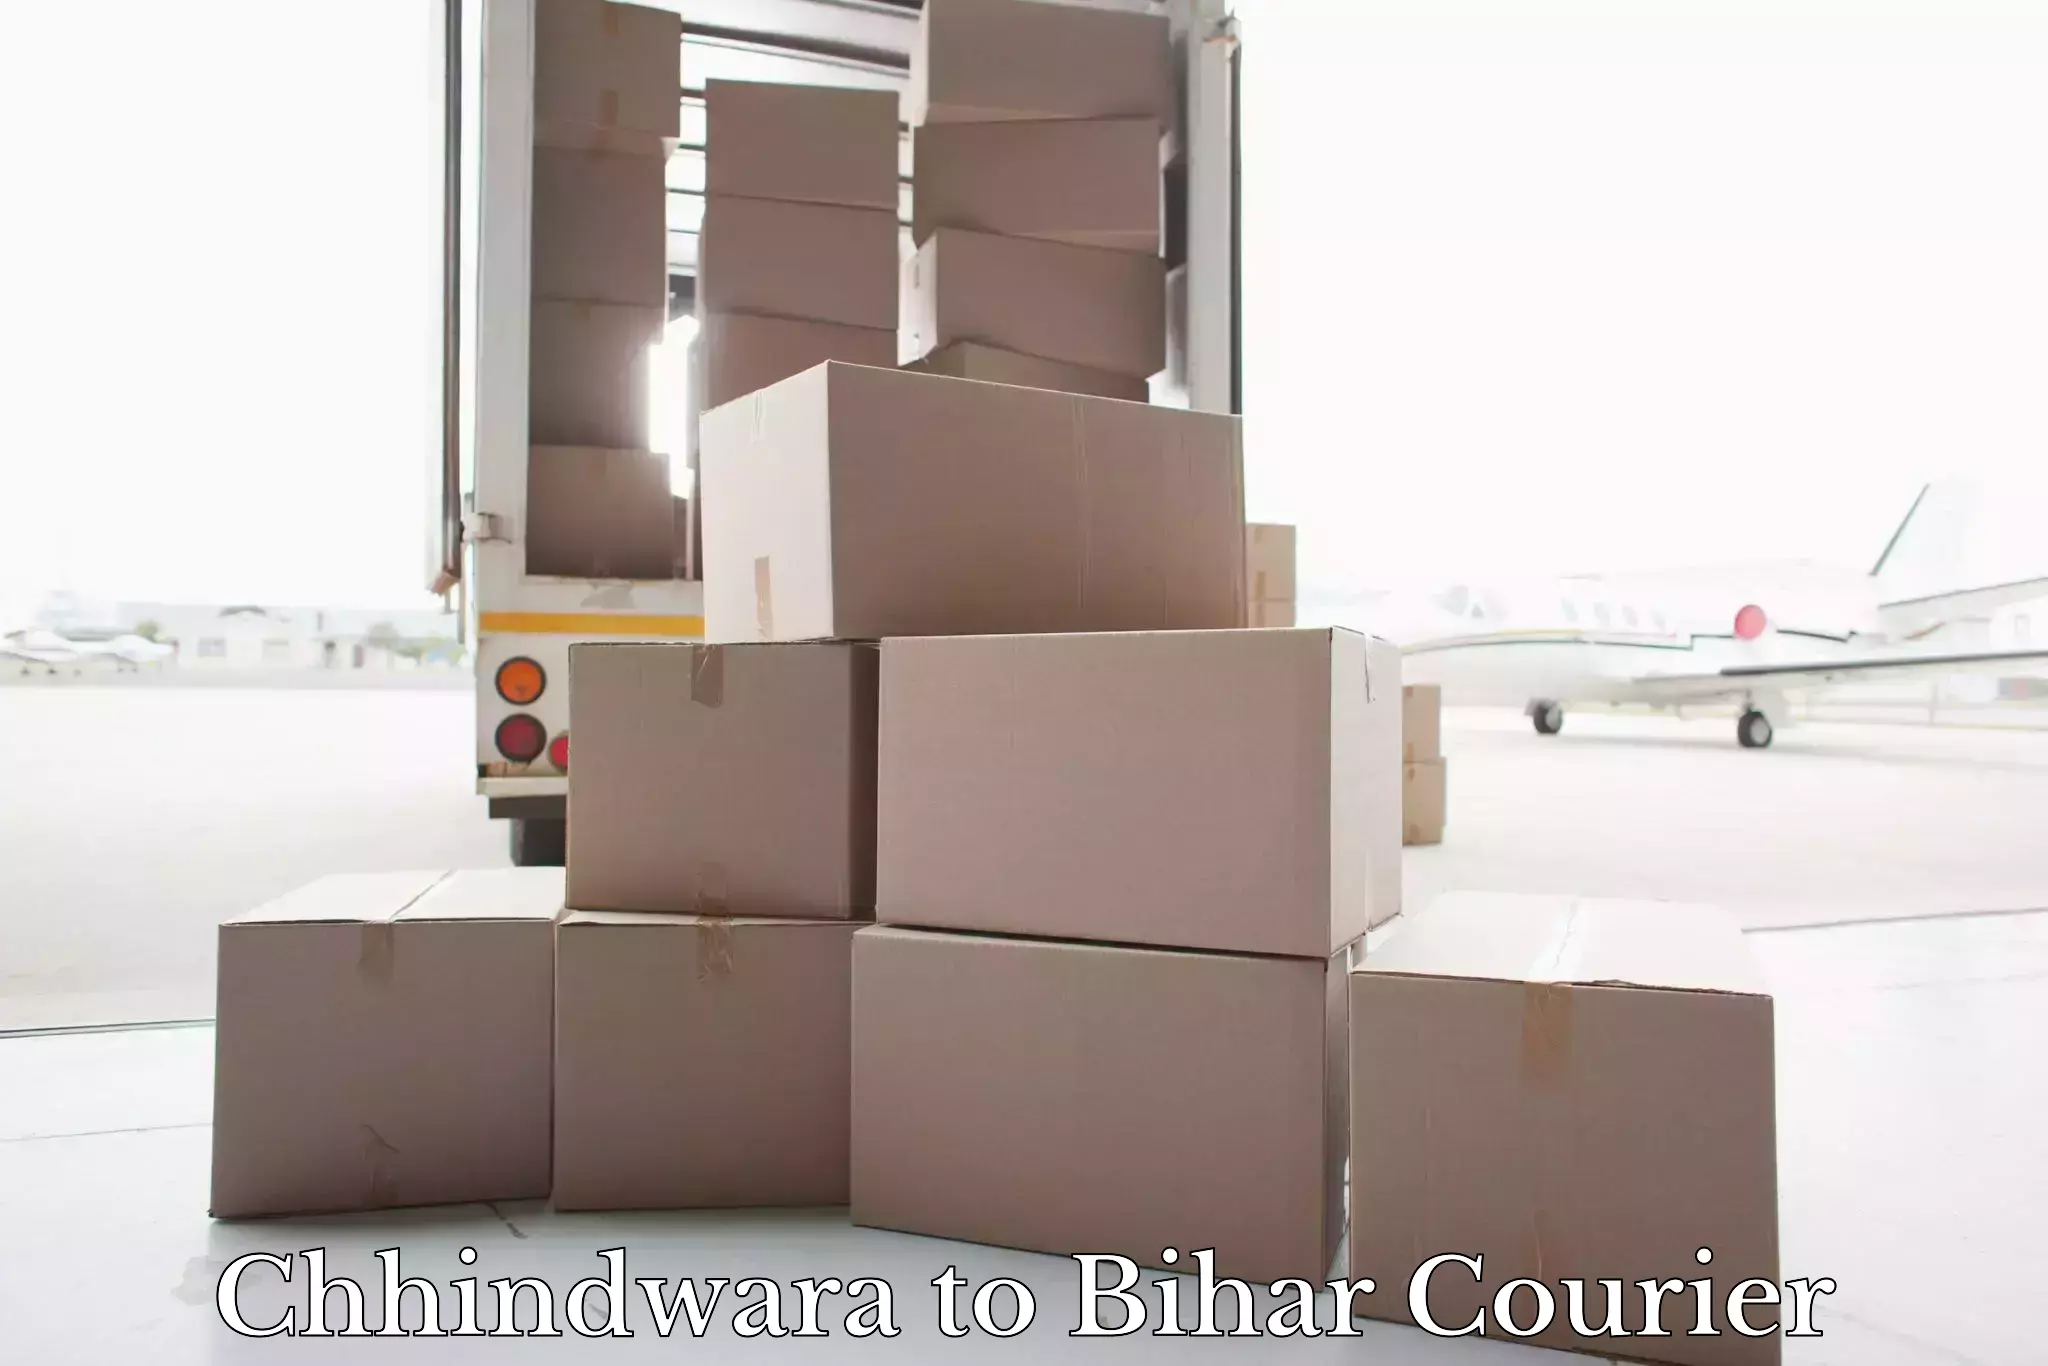 Luggage shipment specialists Chhindwara to Bihar